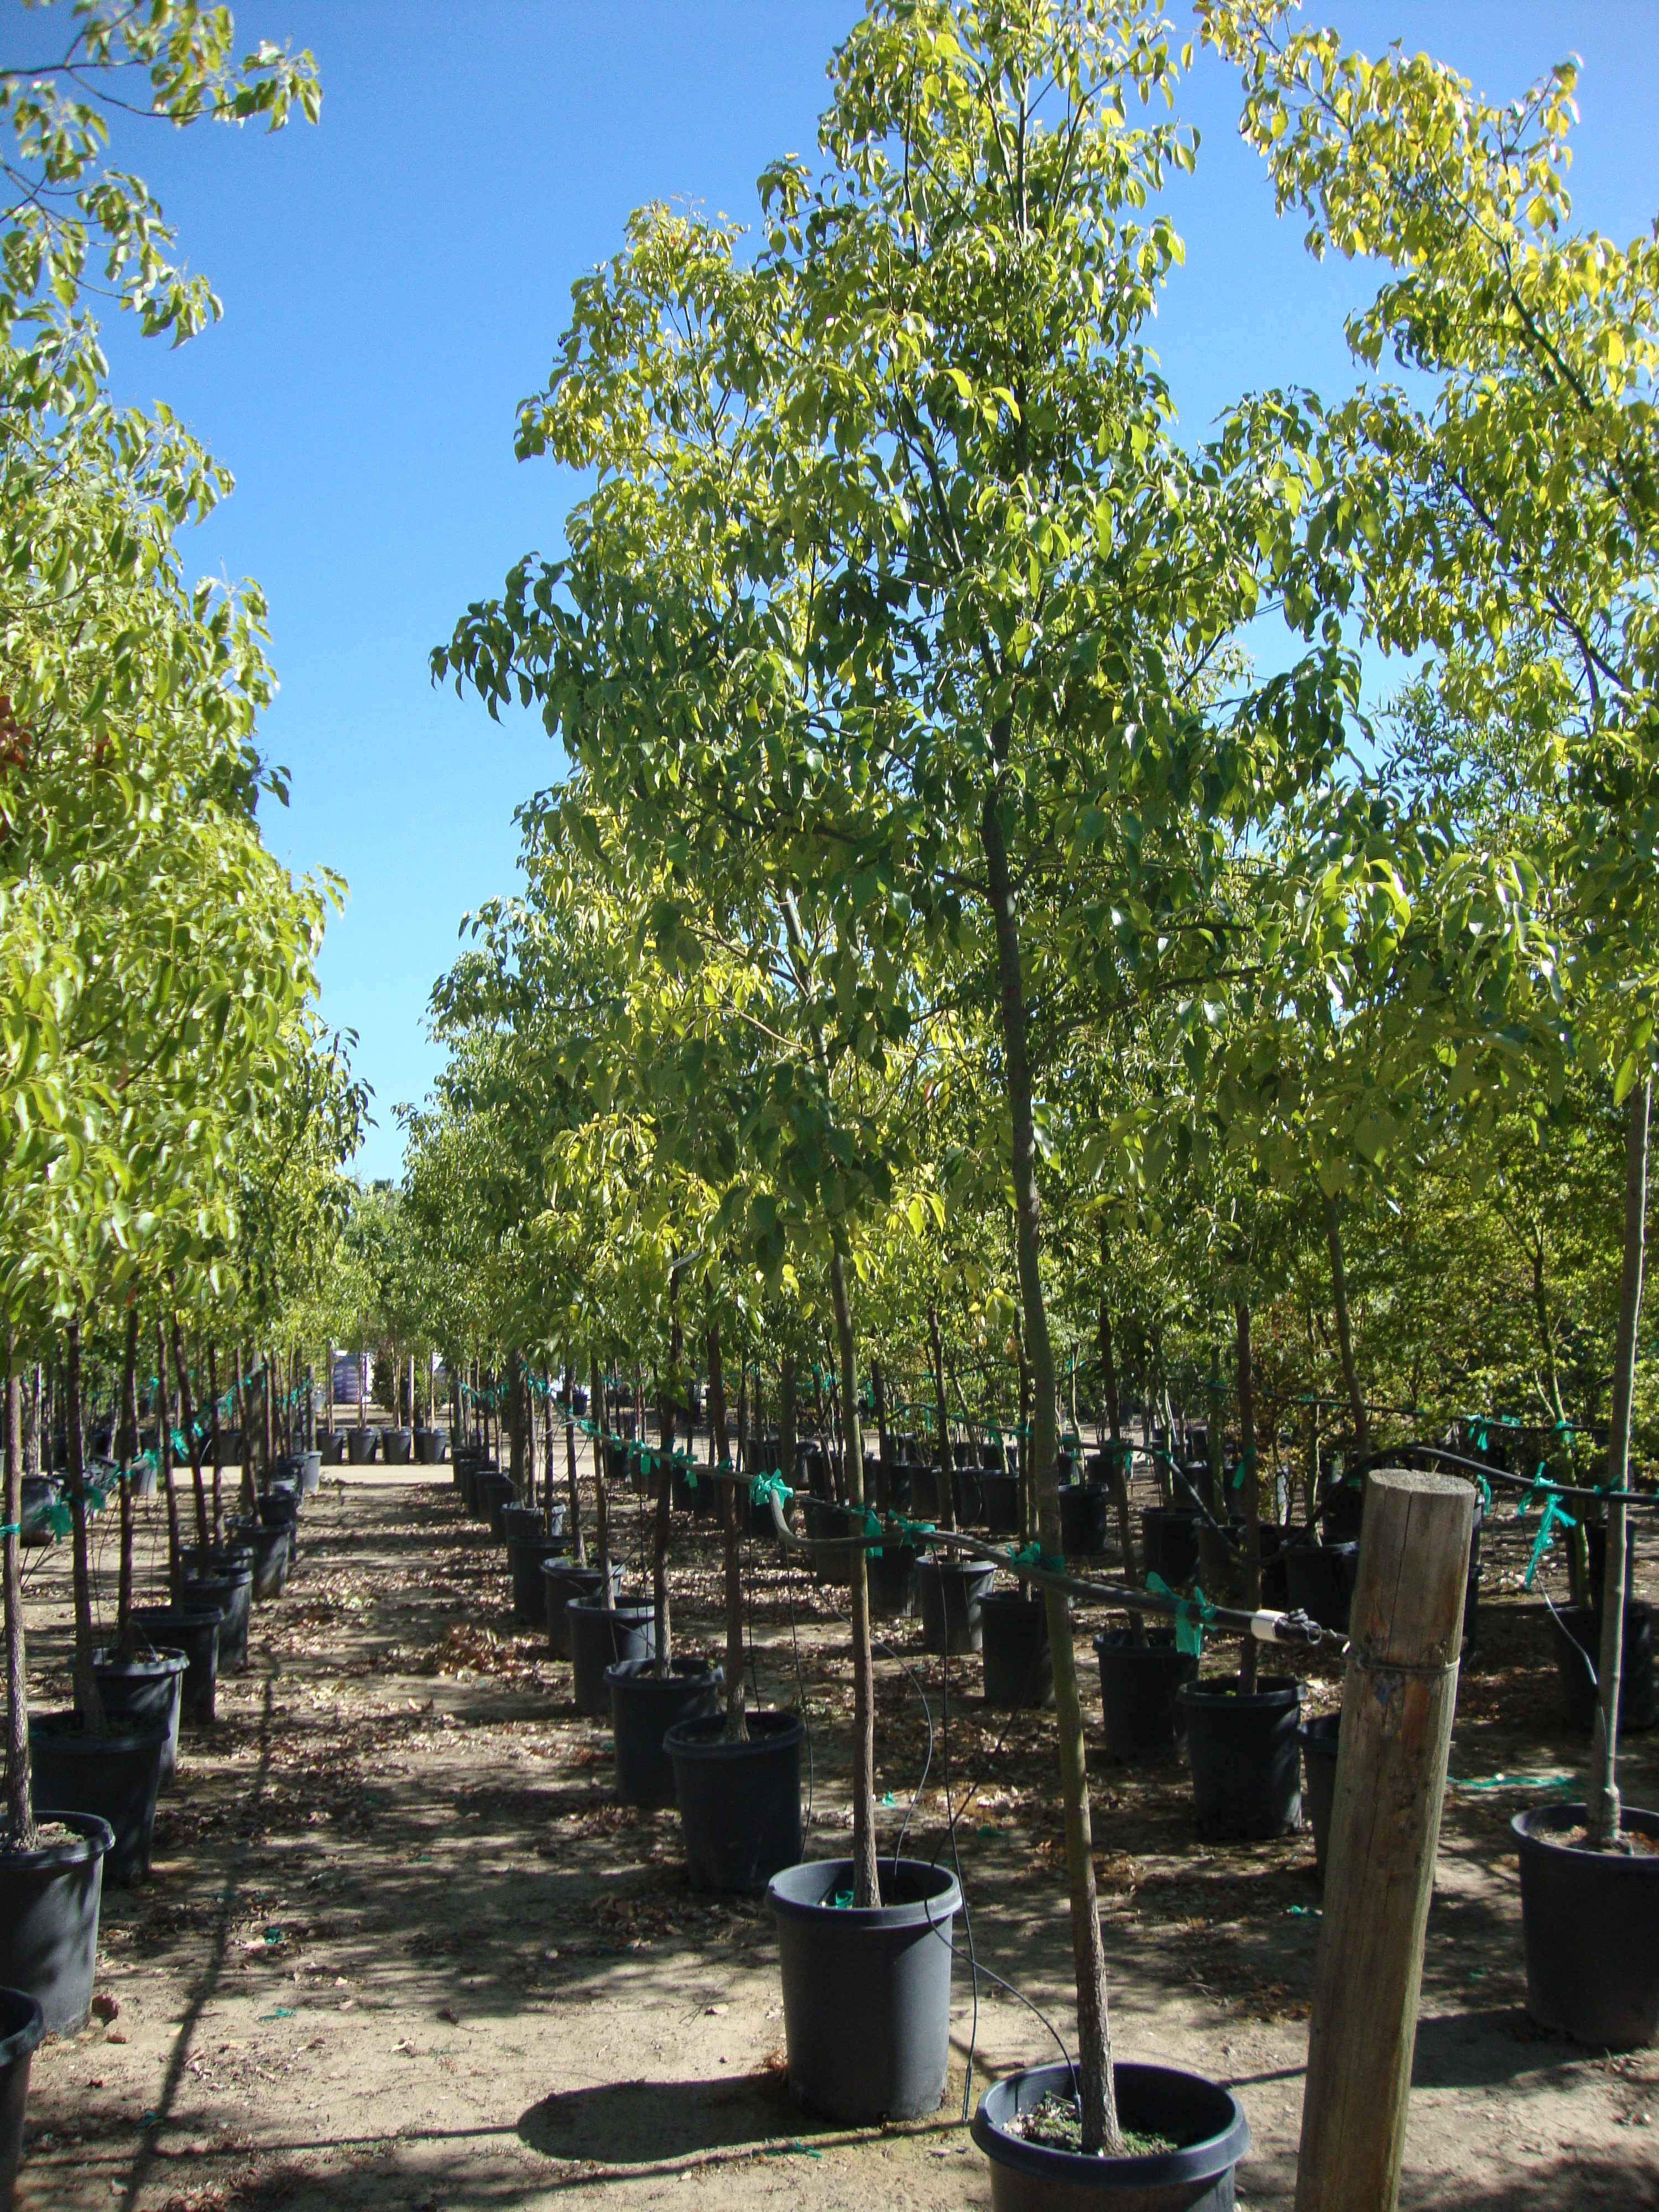 cinnamomum camphora - camphor tree - mid valley trees